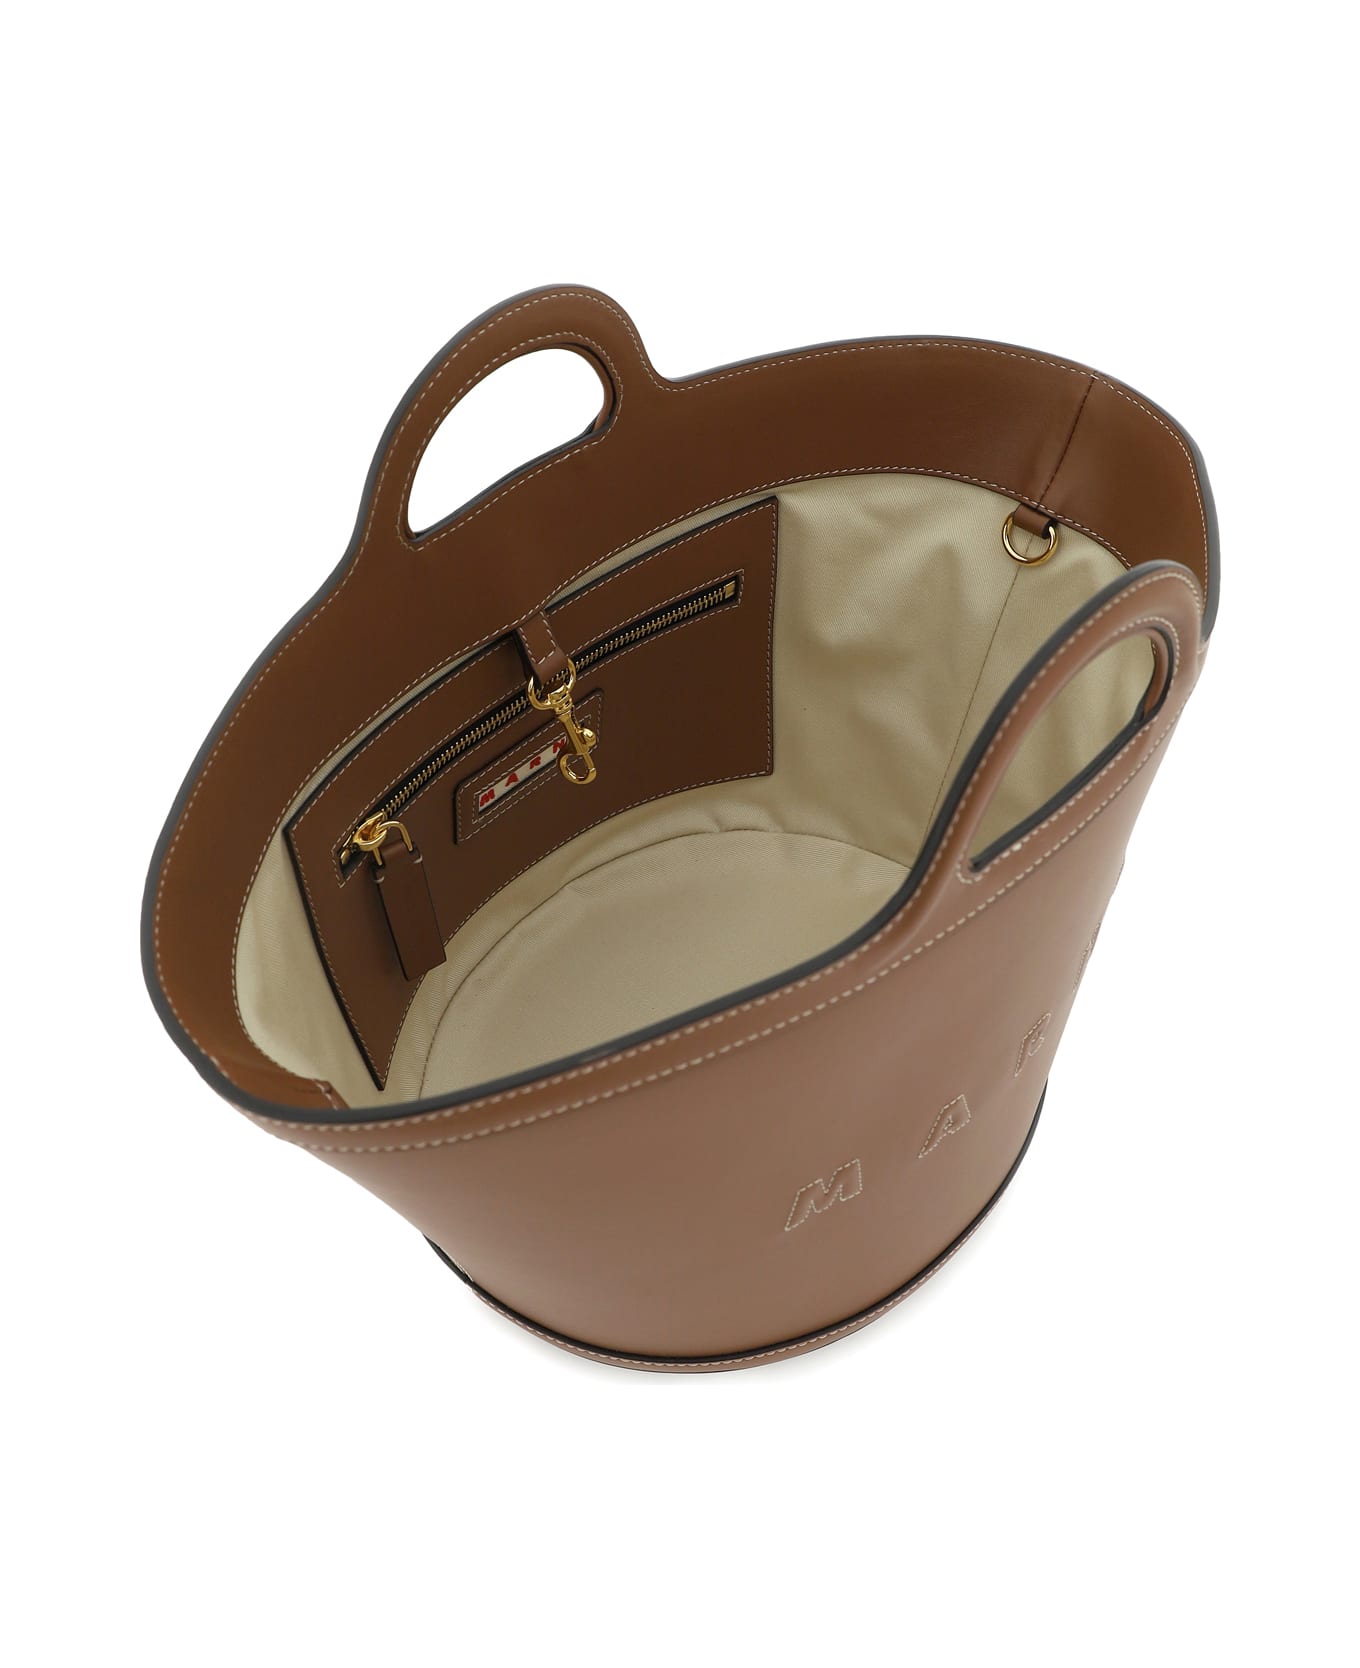 Marni Tropicalia Small Bag In Brown Leather - 00M29